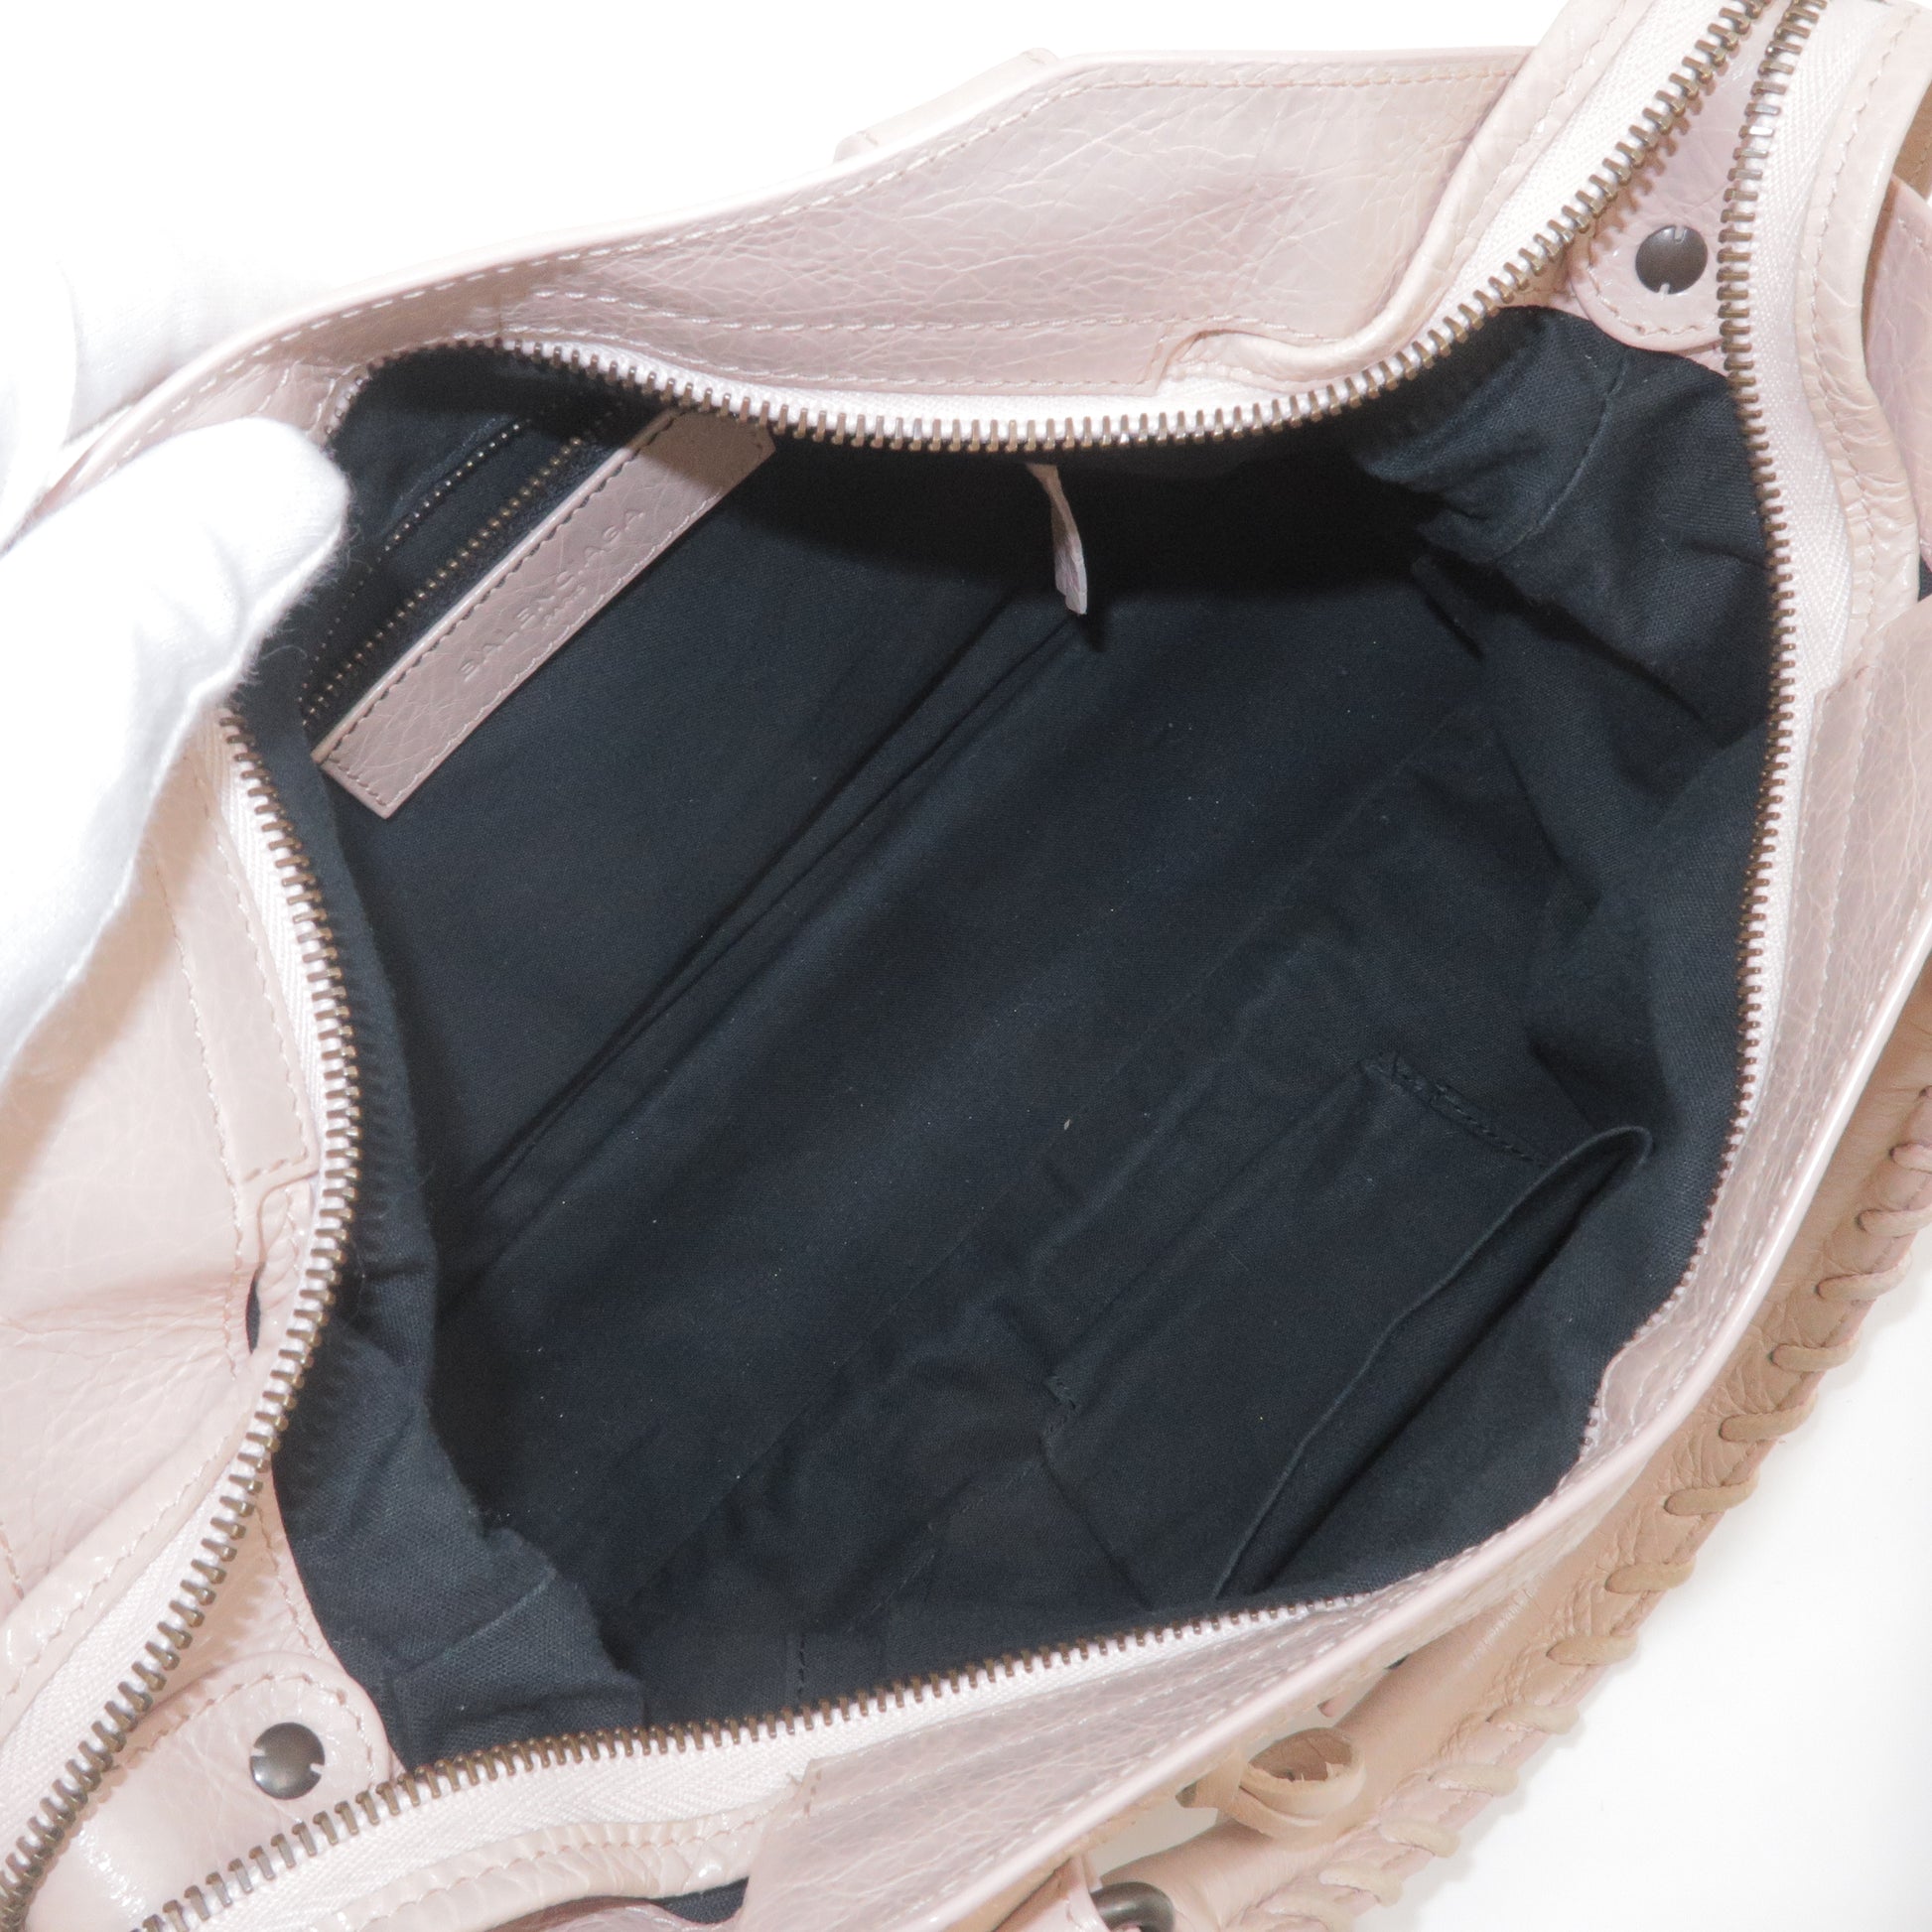 2Way - BALENCIAGA - Town - 240579 – black quilted logo crossbody bag - Bag  - Hand - Pink - The - Beige - Leather - michael kors soho cross body bag  item